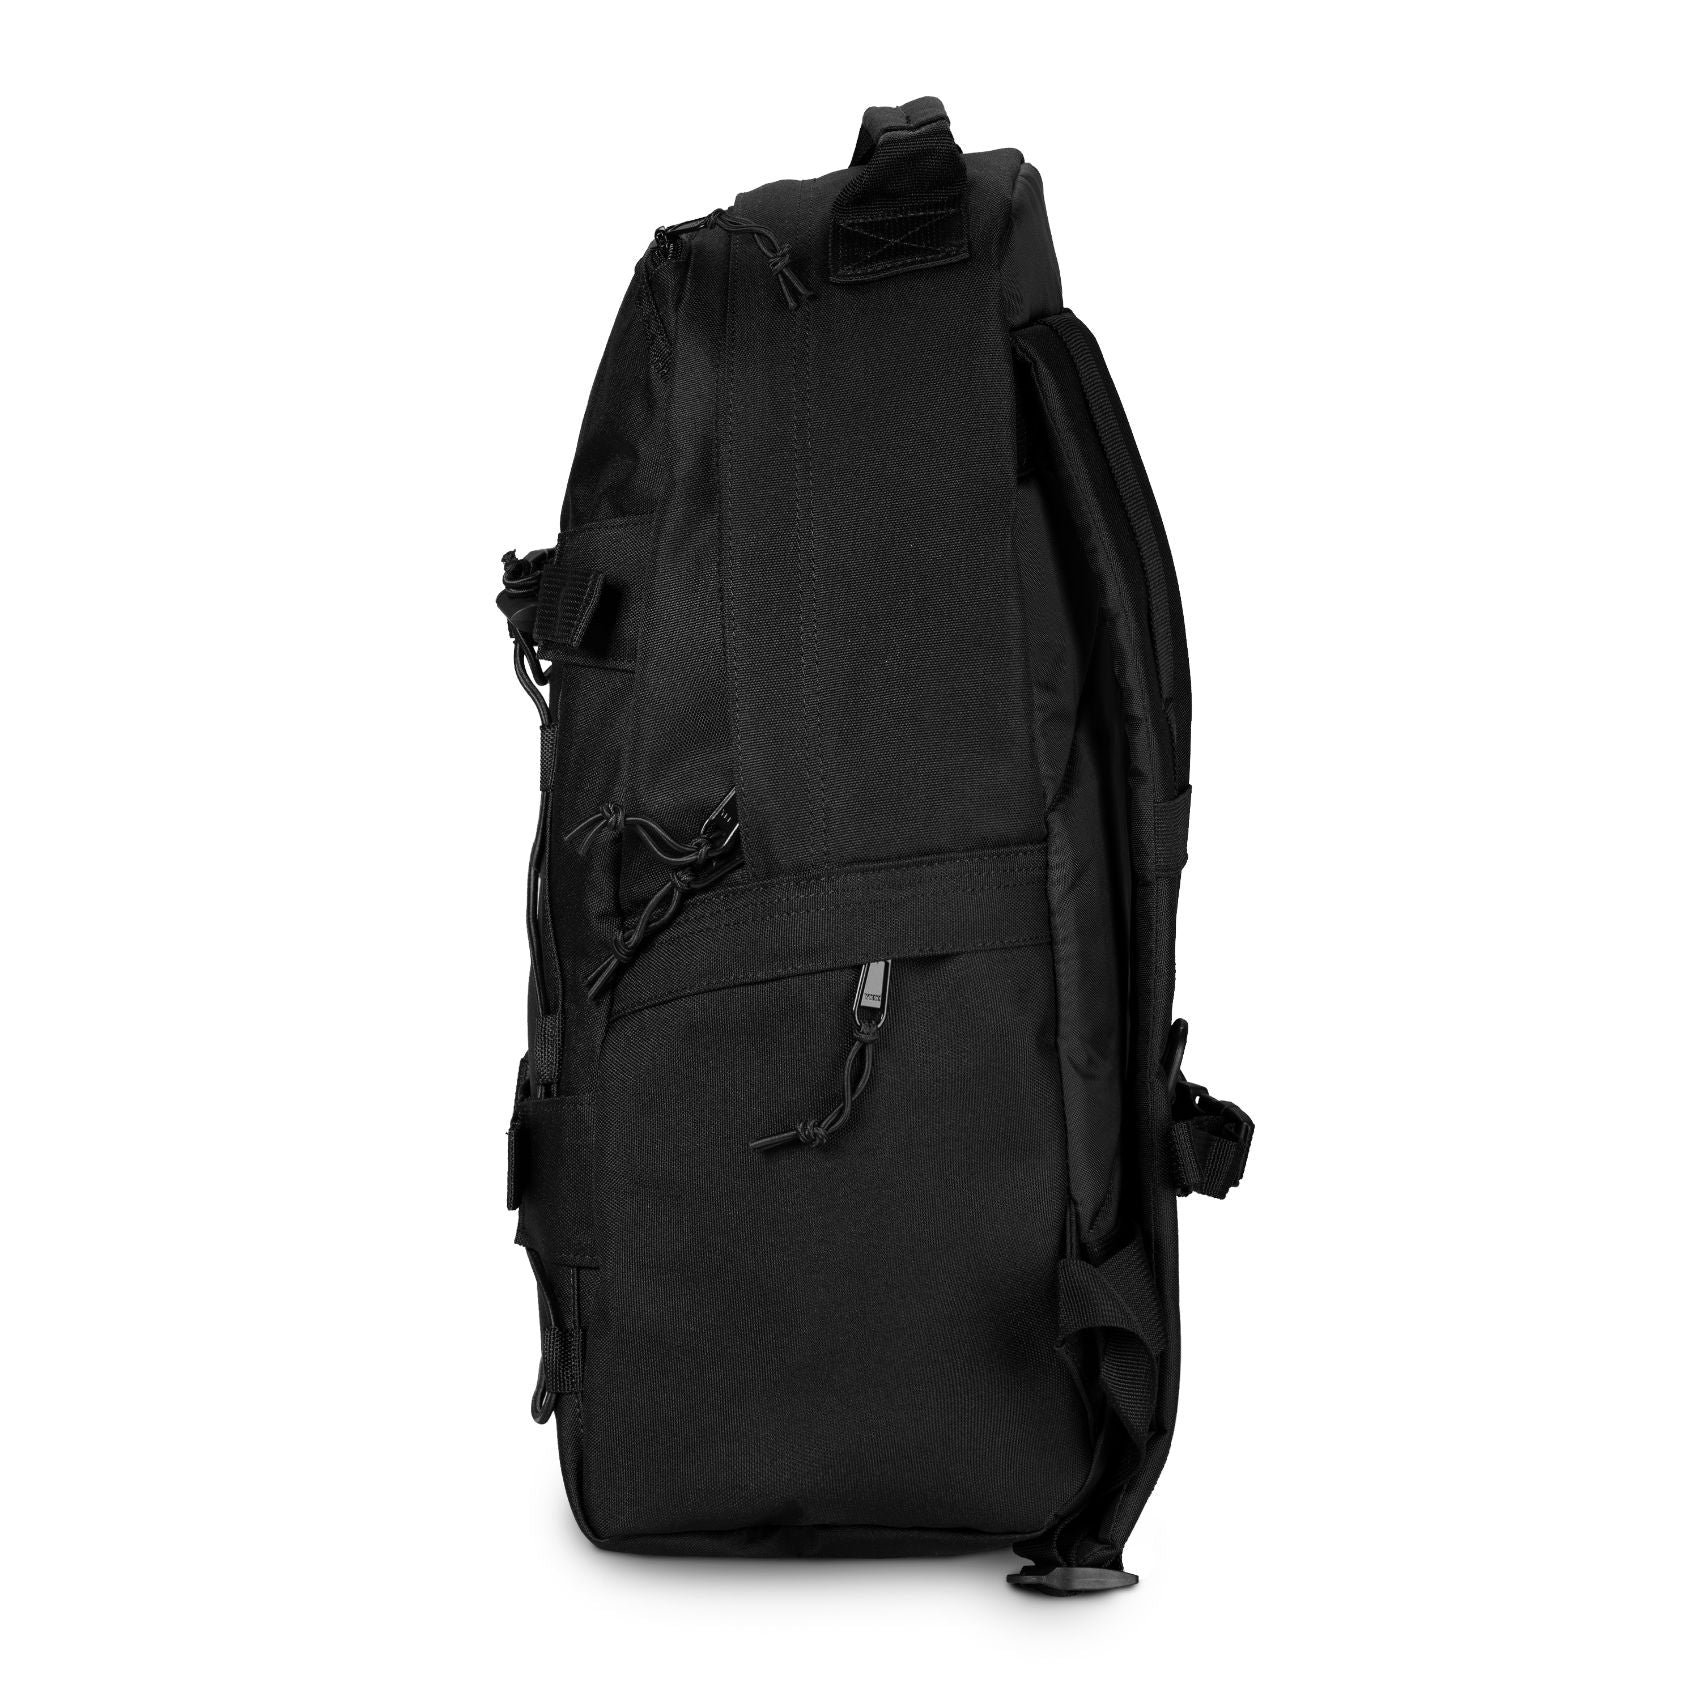 Carhartt WIP Kickflip Backpack Black. Foto do lado esquerdo.